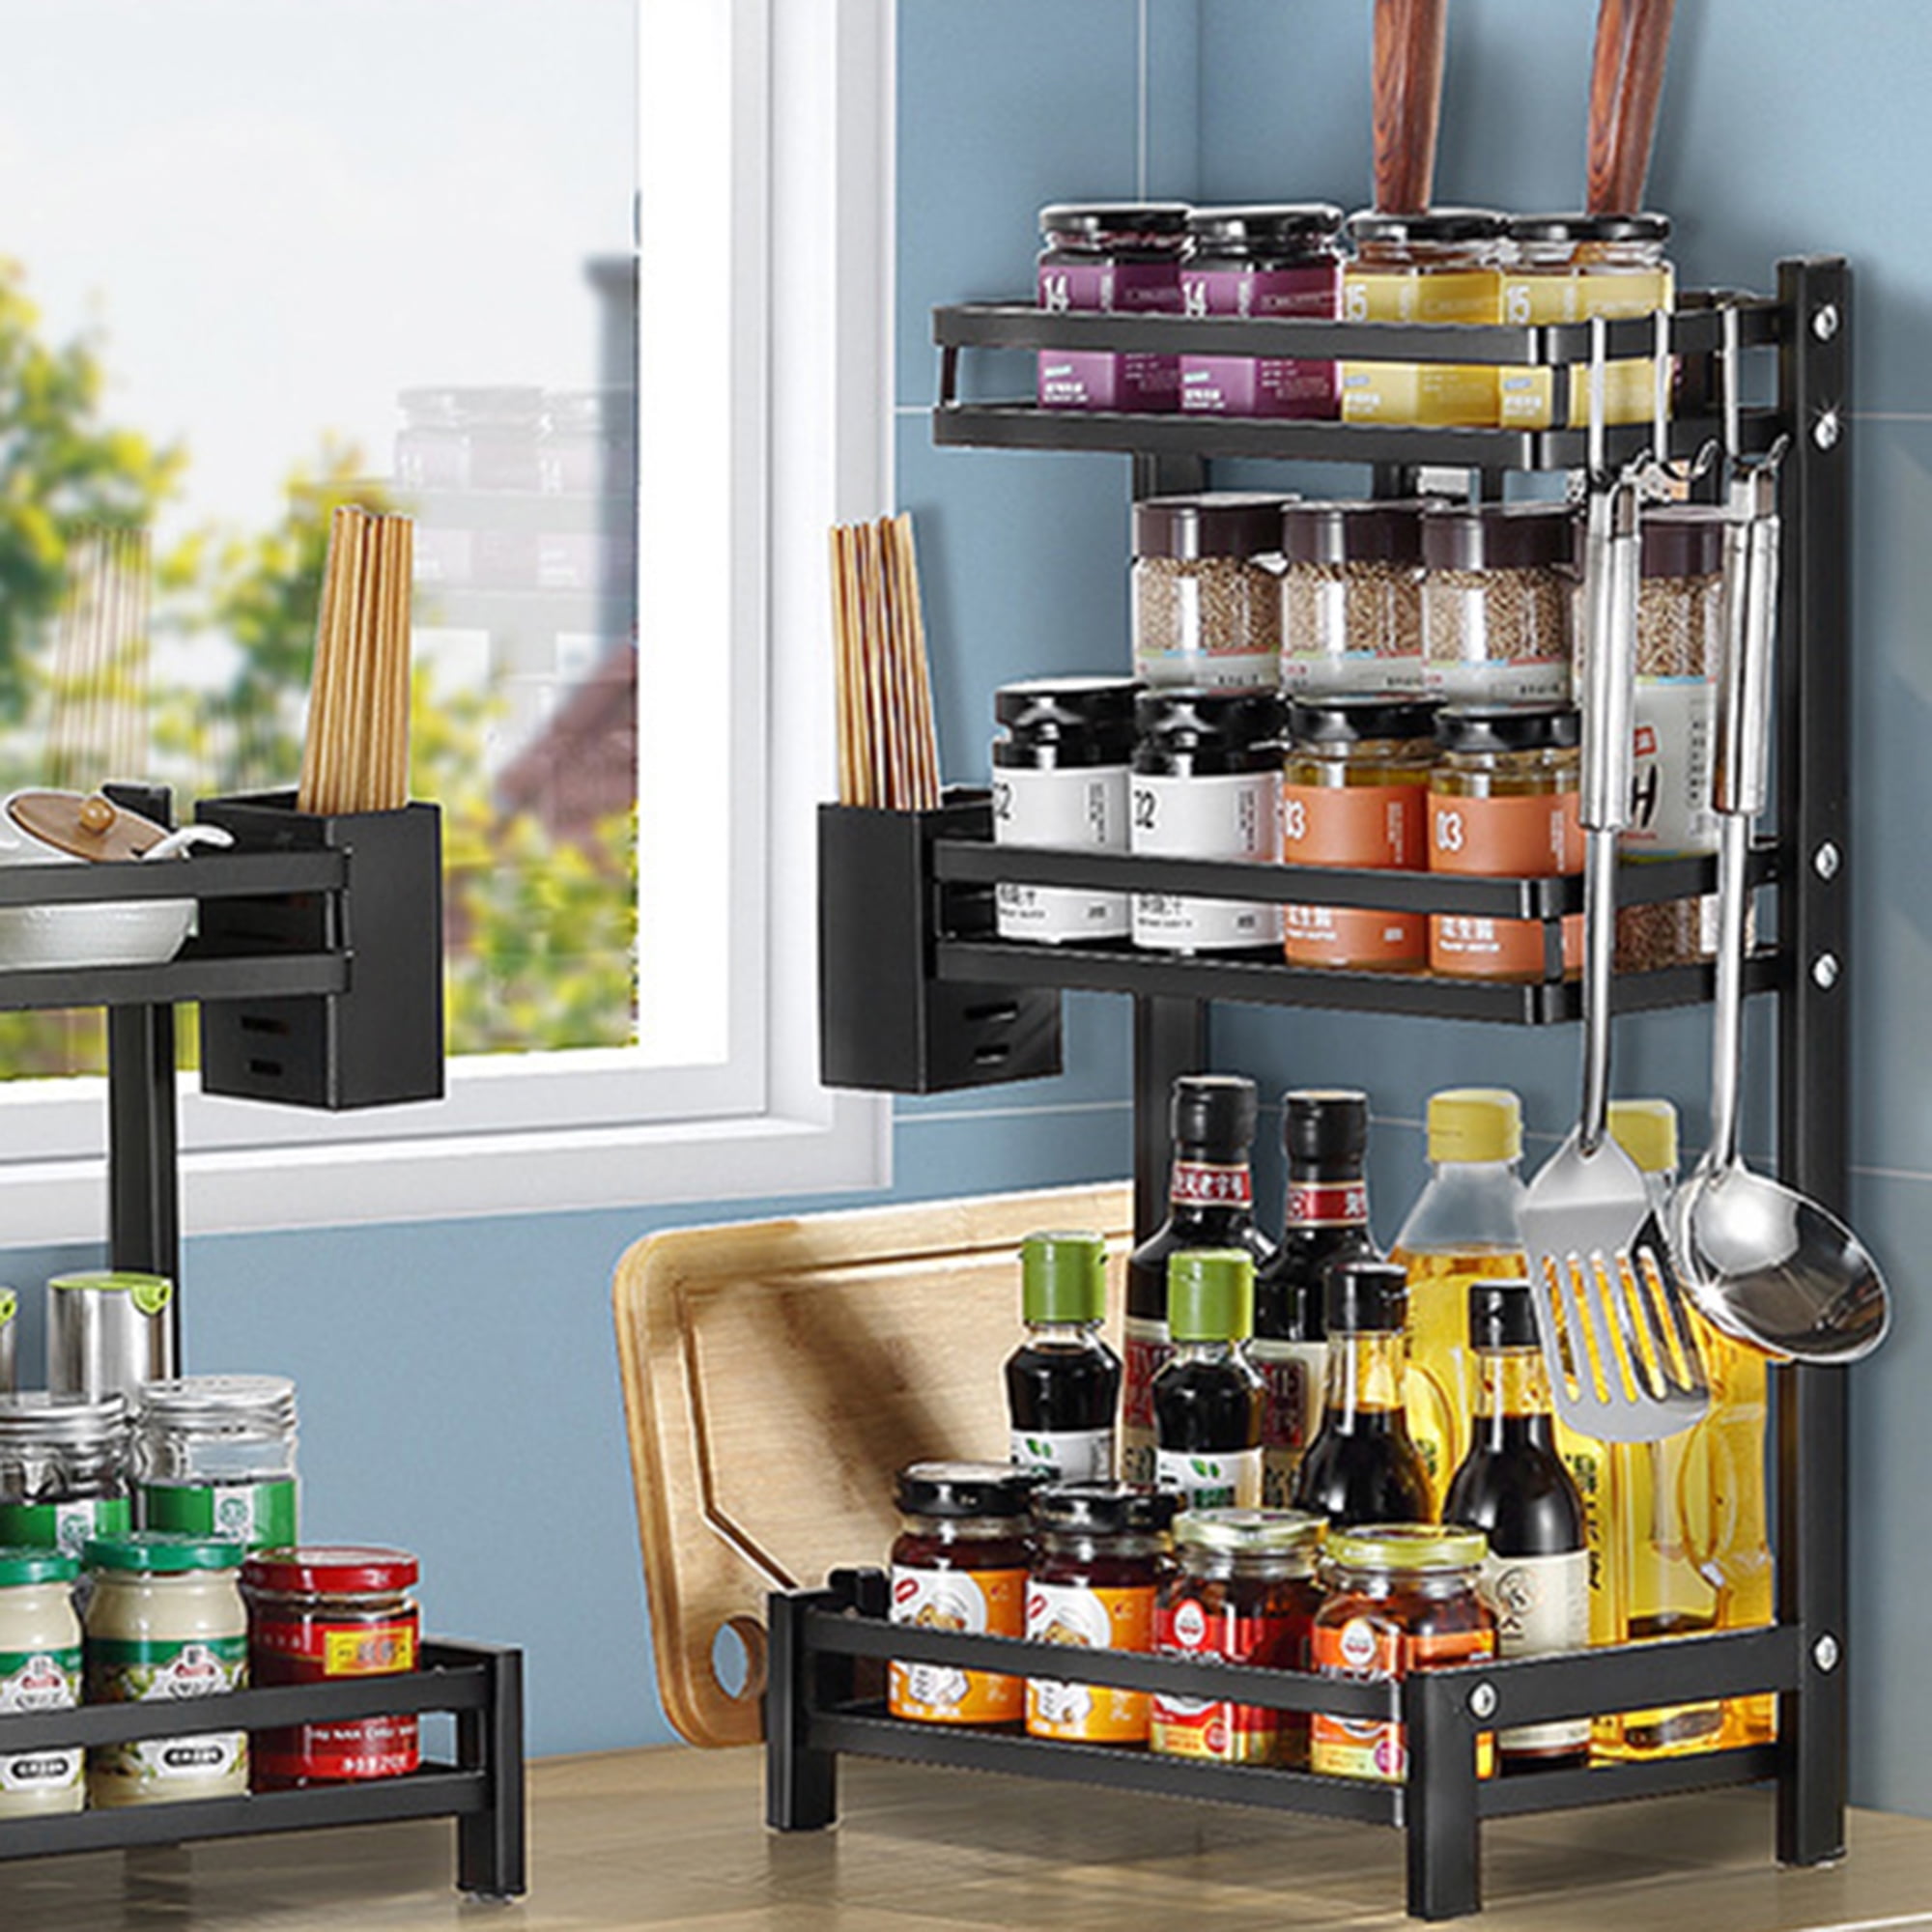 Details about   Kitchen Drawer Shelf Rack Wall Mounted Storage Basket Pull-out Seasoning Holder